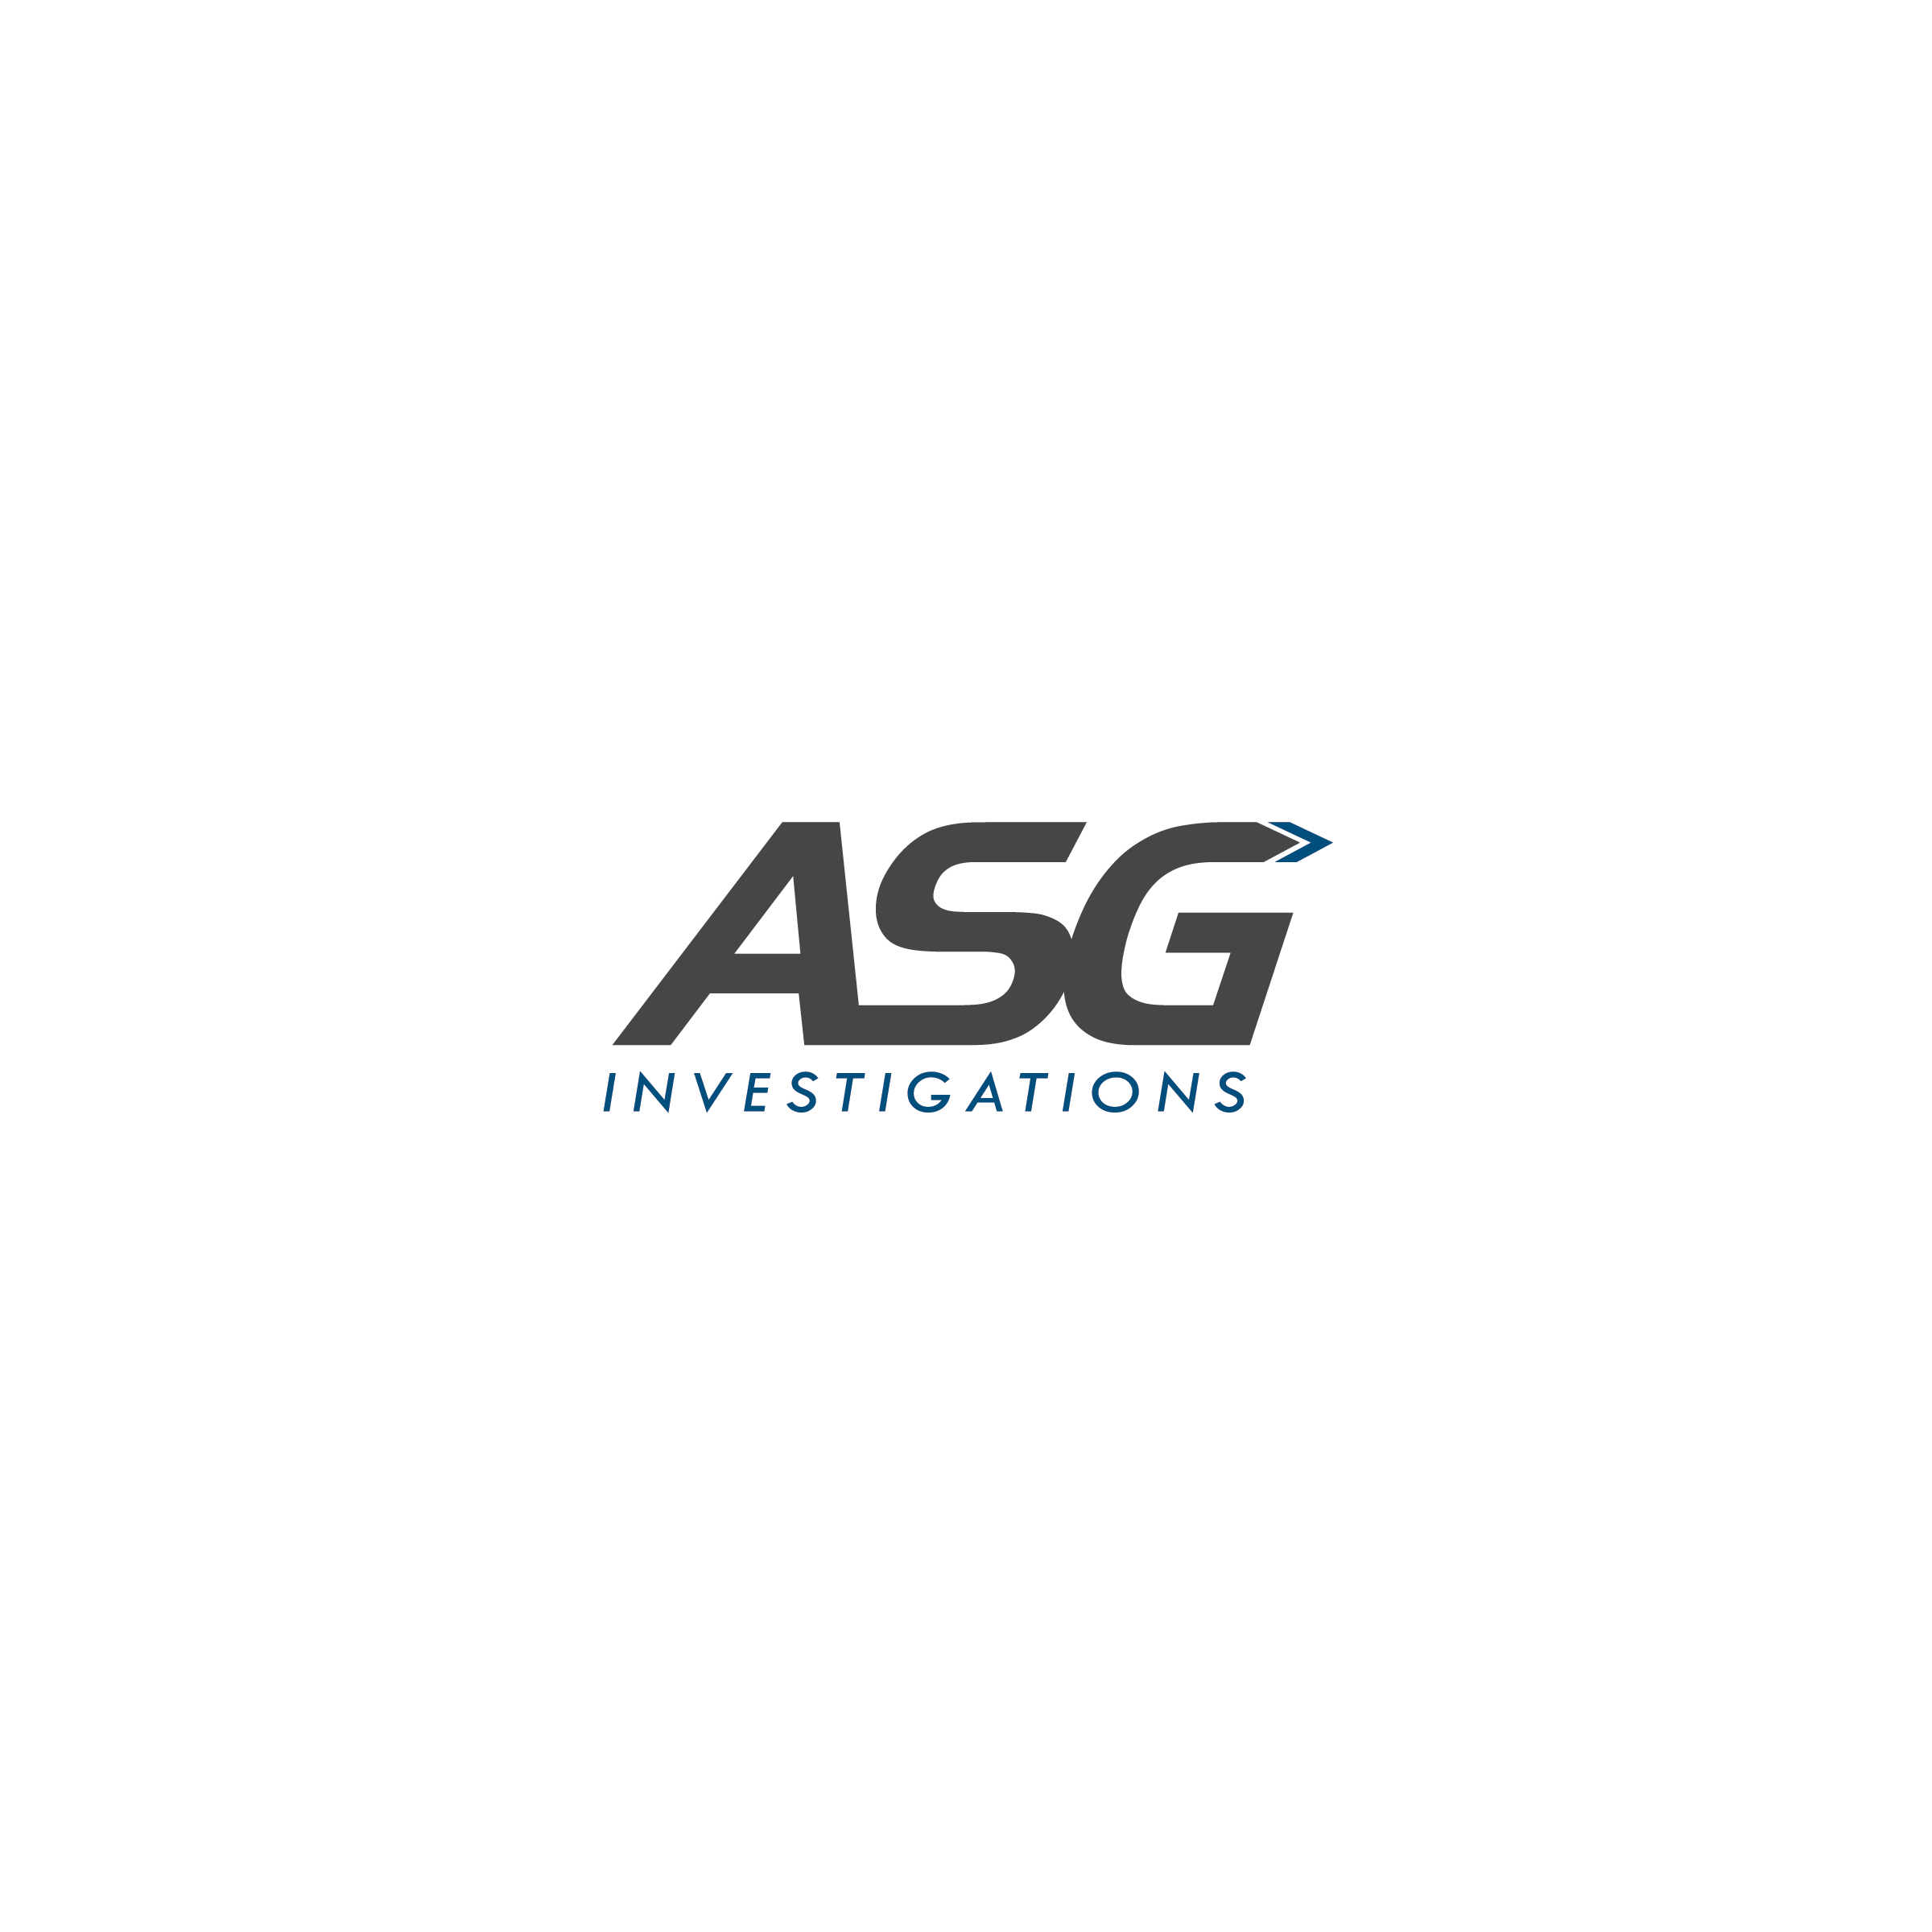 ASG Investigations